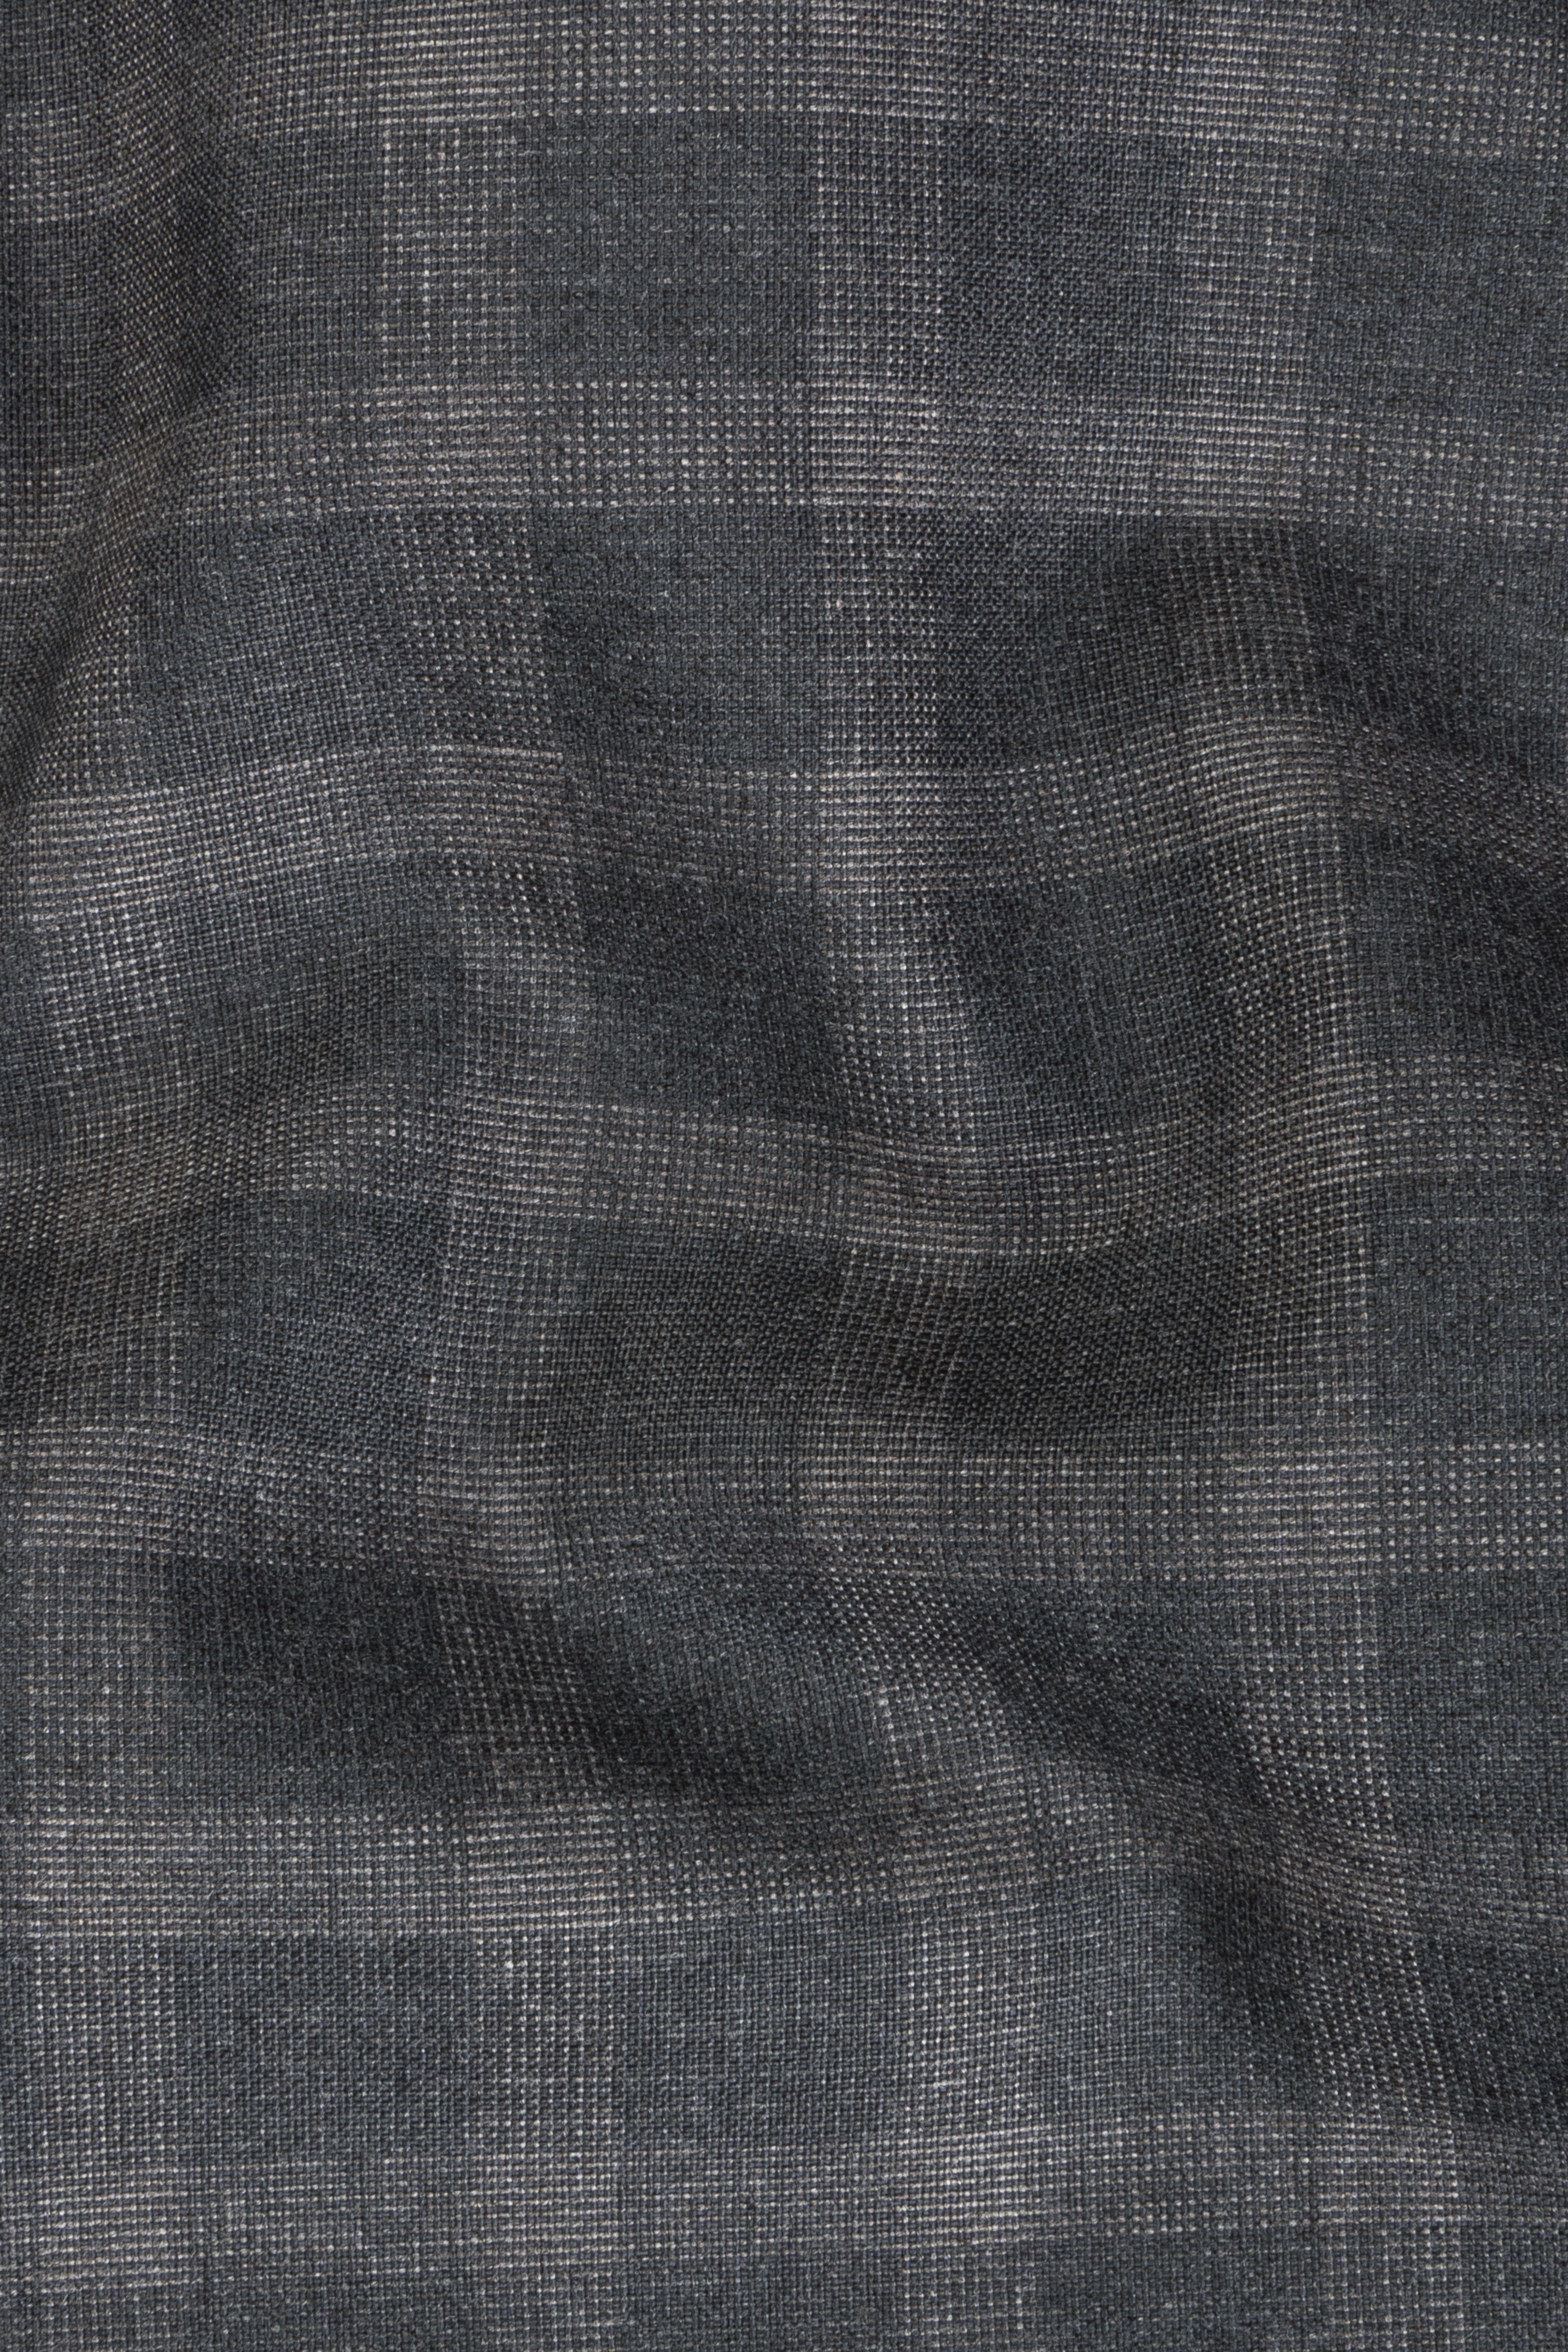 Gravel Gray Checkered Wool Blend Pant